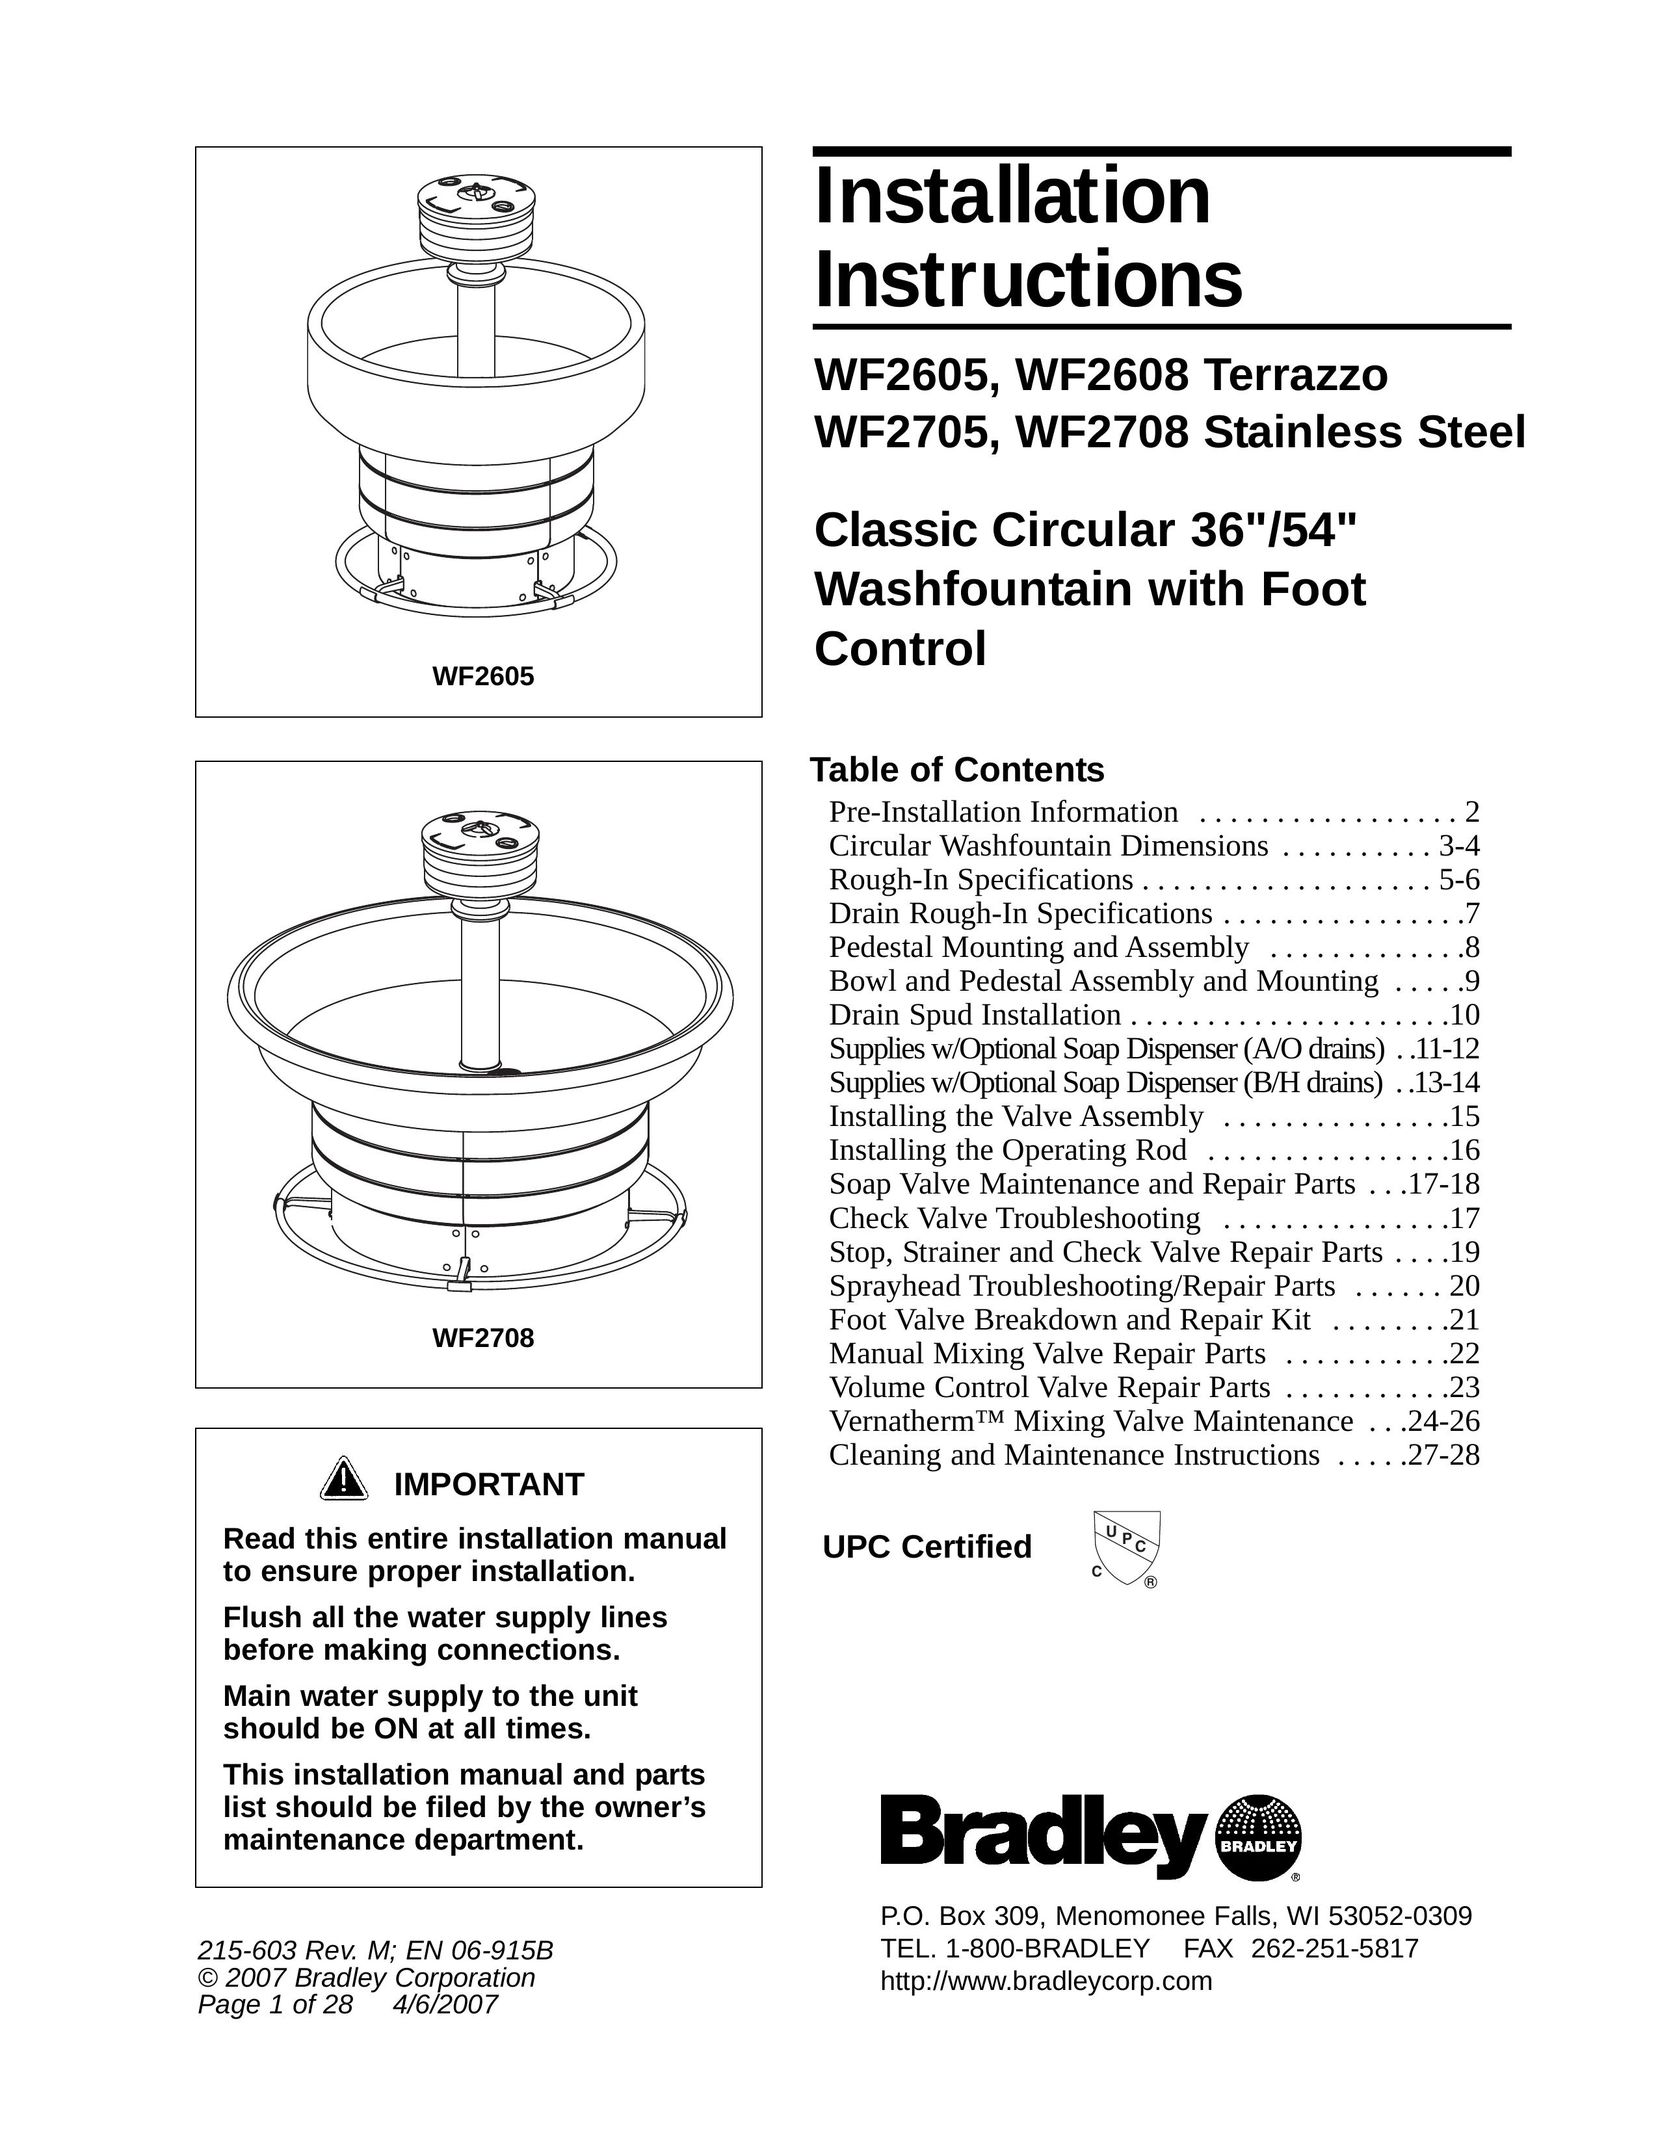 Bradley Smoker WF2708 Plumbing Product User Manual